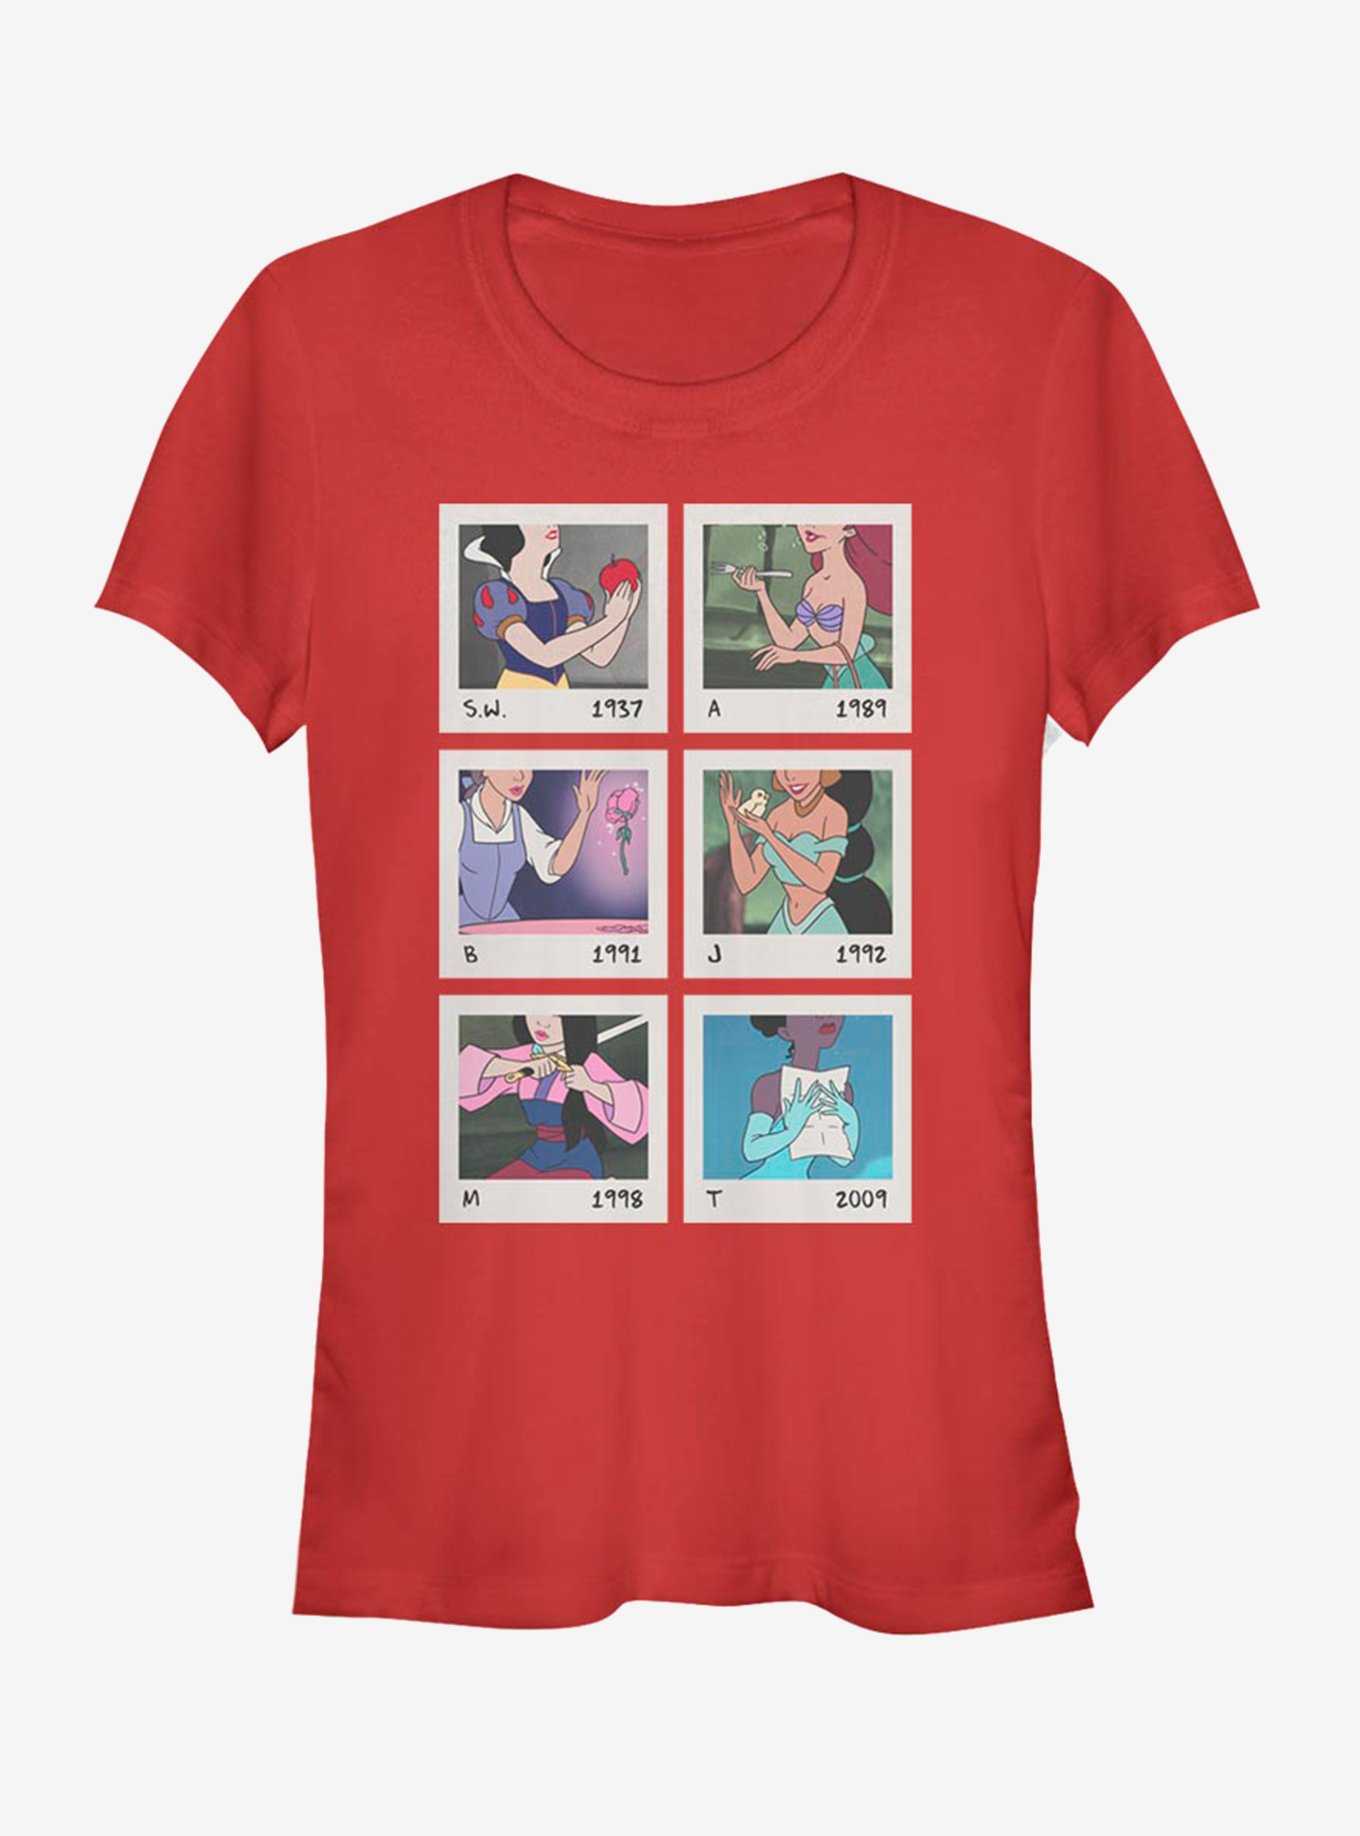 Disney Princess Polaroid Pictures Girls T-Shirt, , hi-res